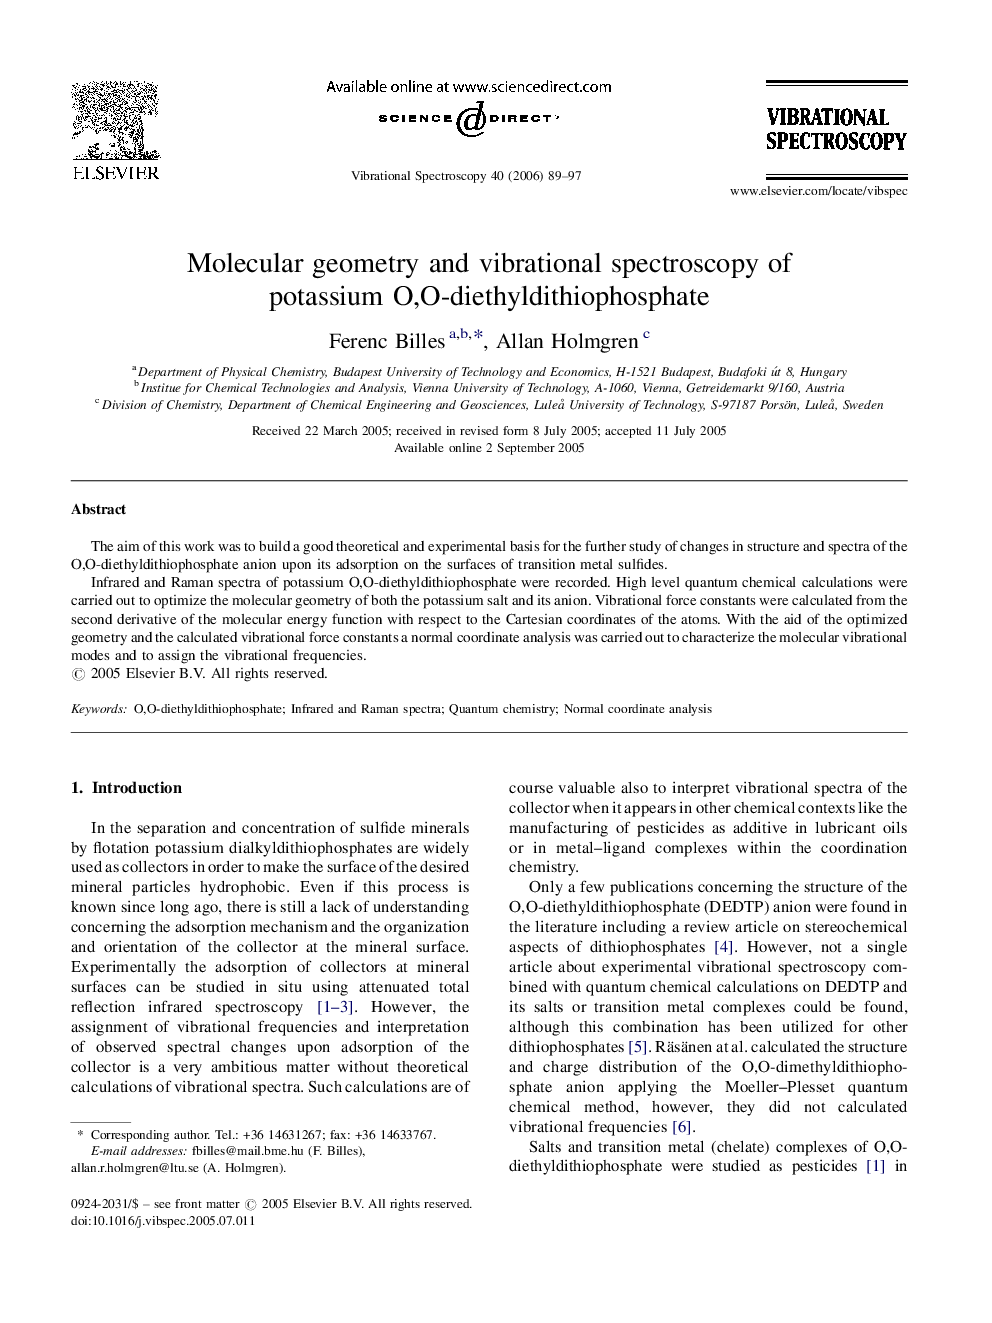 Molecular geometry and vibrational spectroscopy of potassium O,O-diethyldithiophosphate